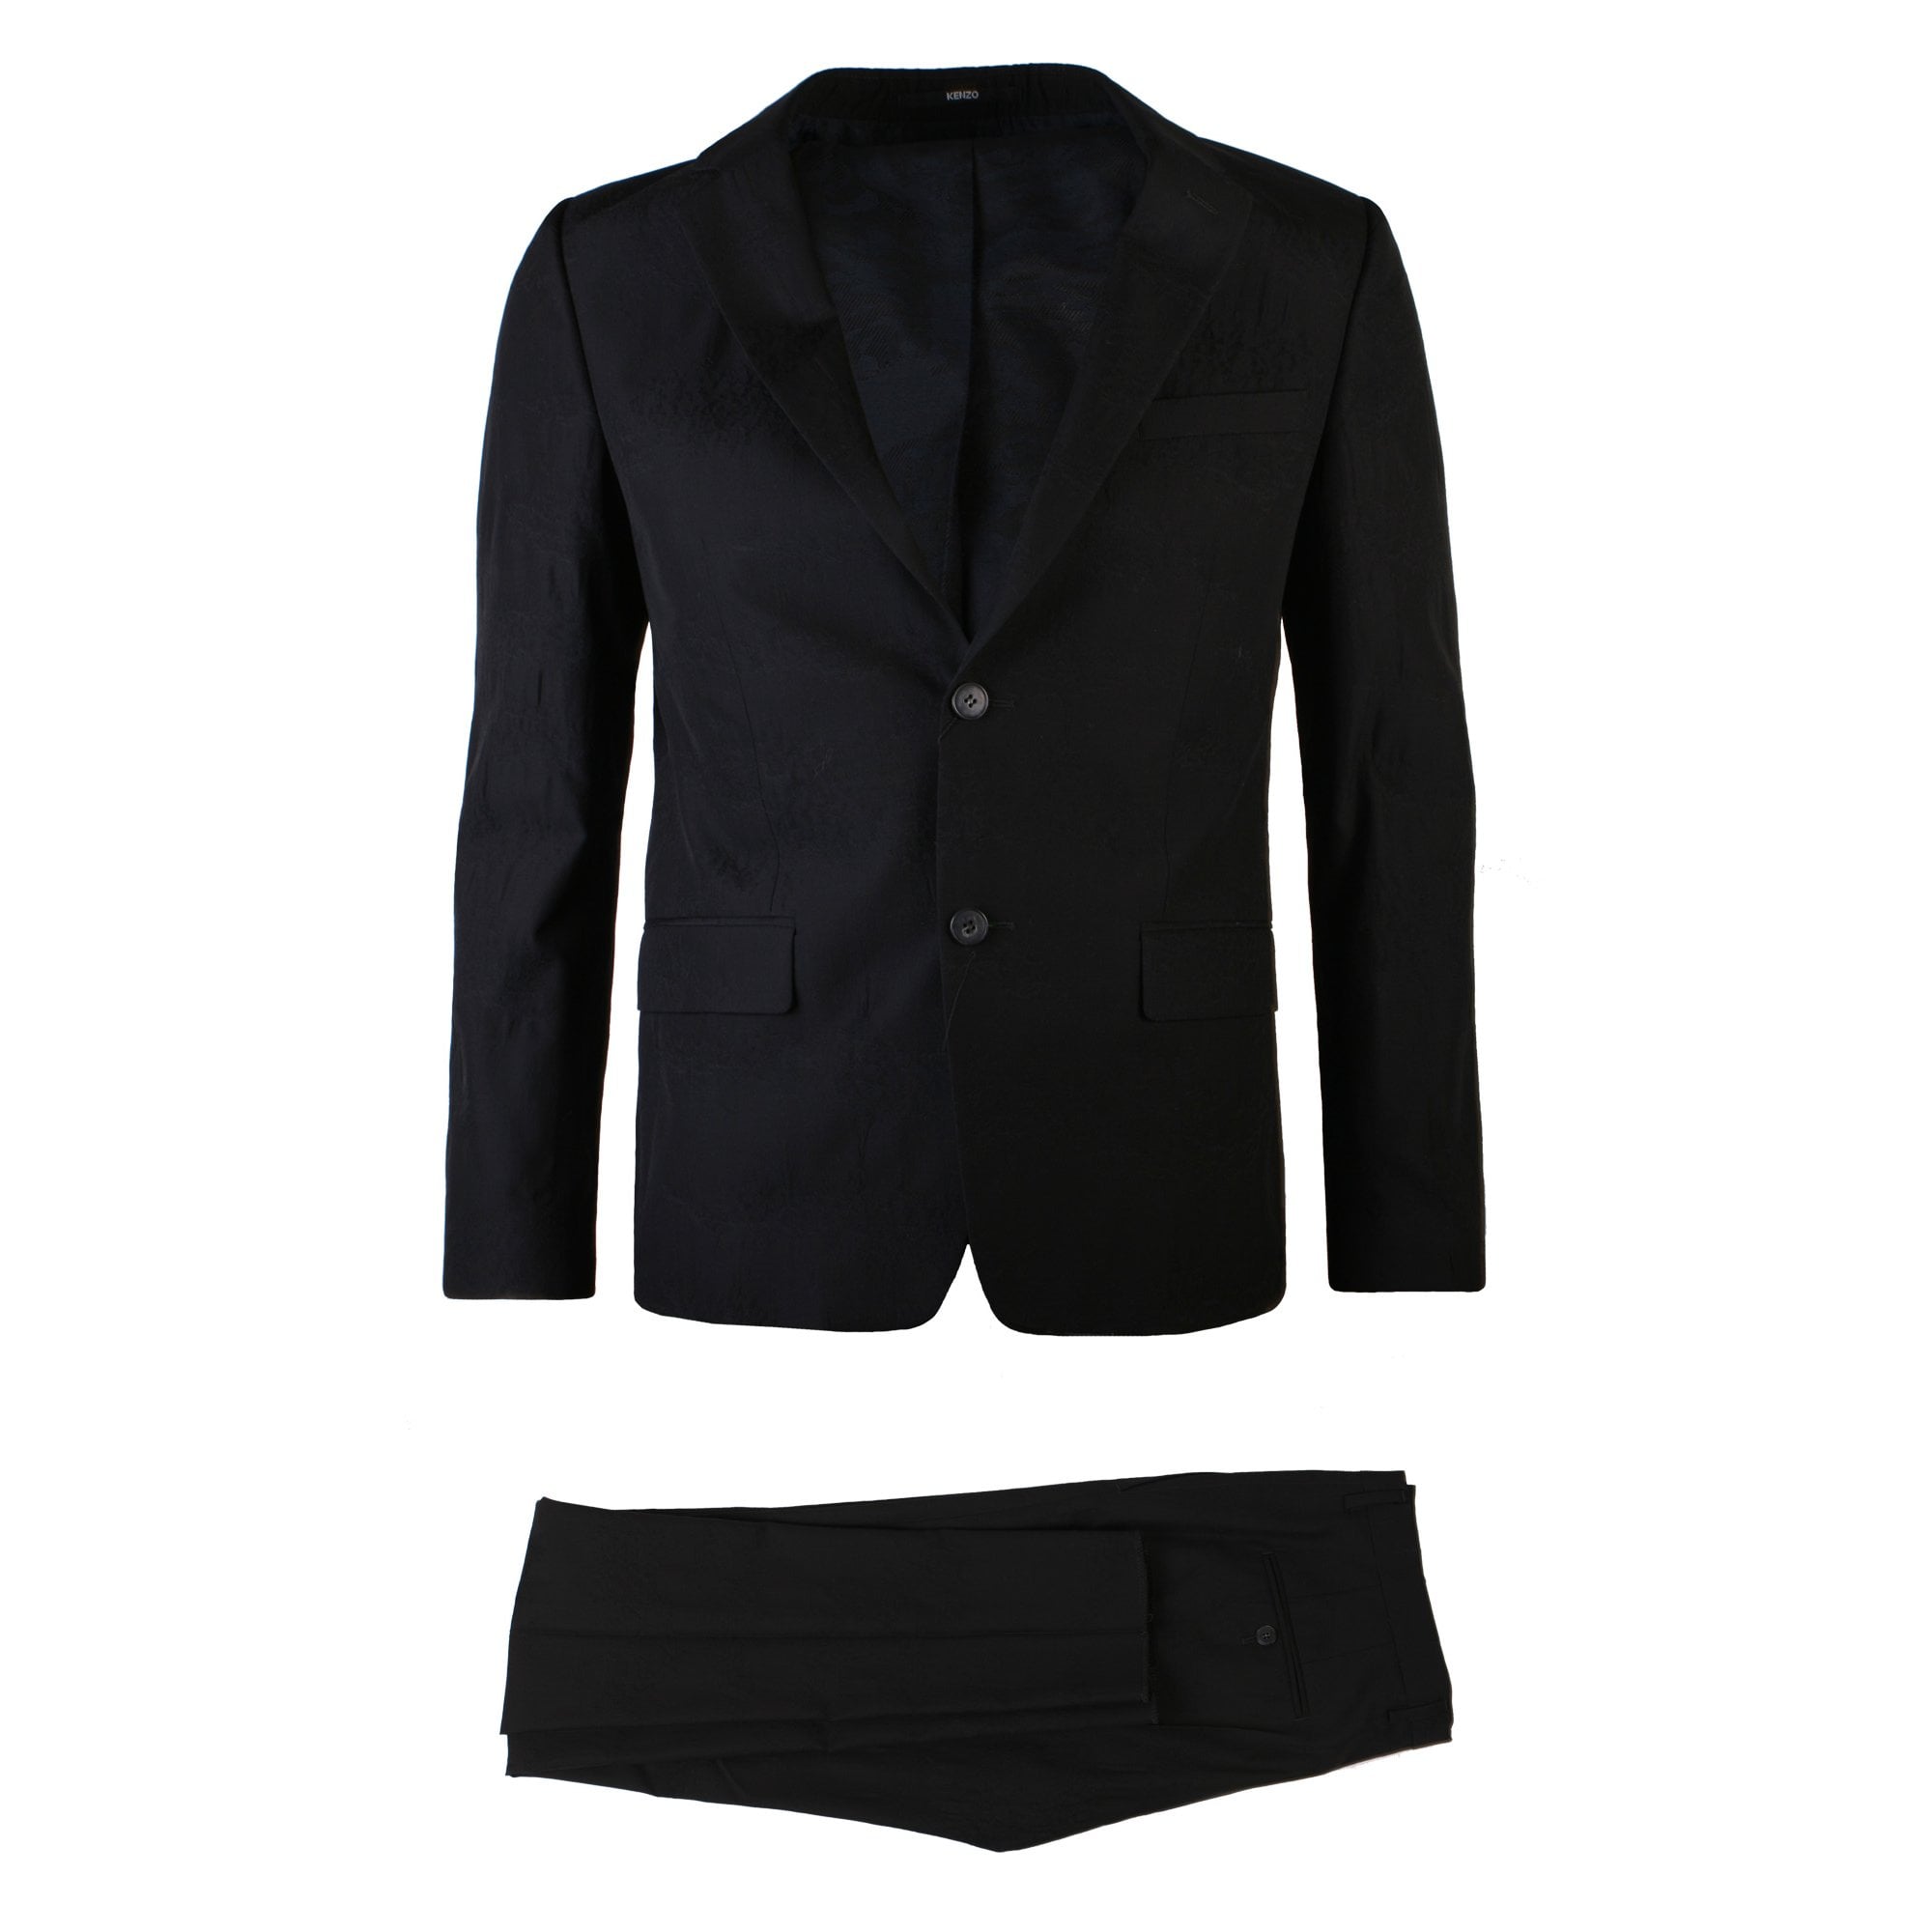 Kenzo Men's Textured Suit Black - BLACK M